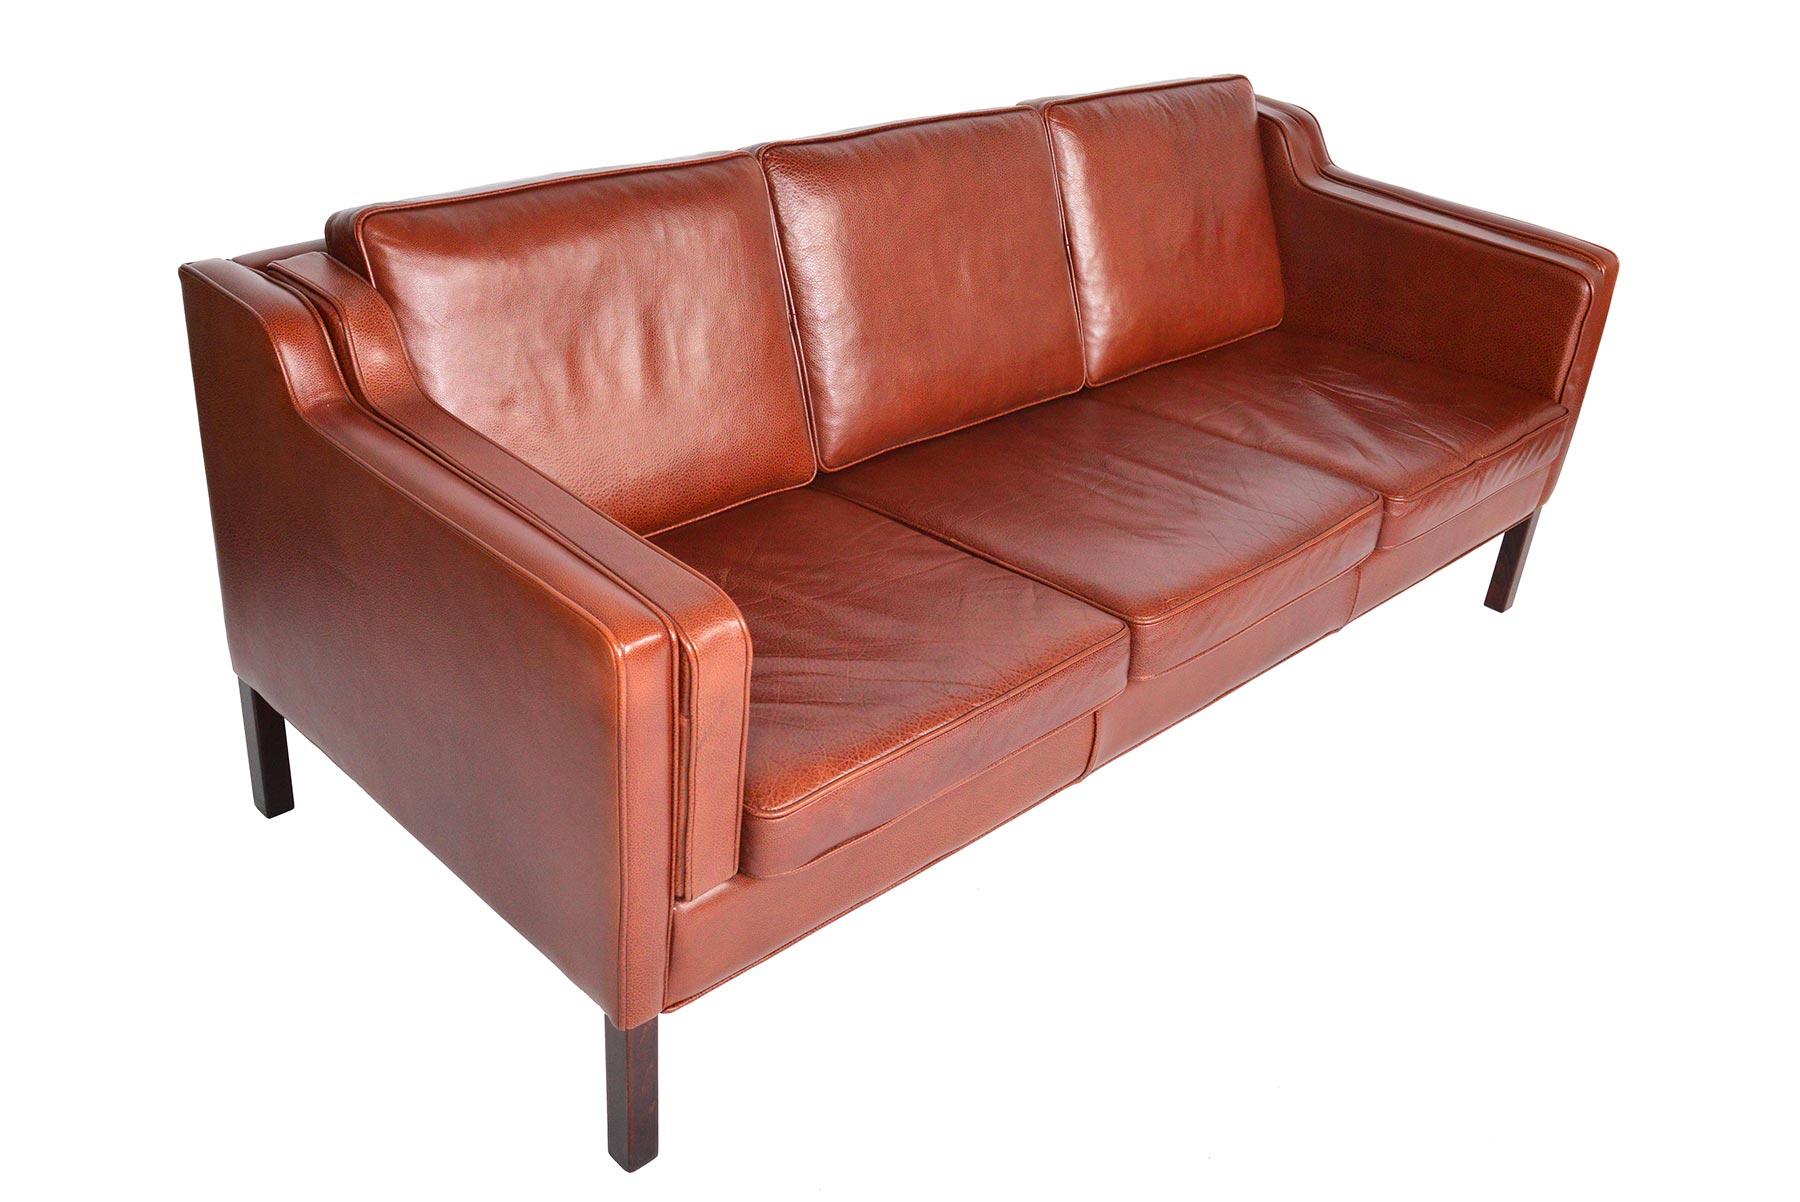 Scandinavian Modern Danish Modern Three-Seat Sofa in Rust Red Leather